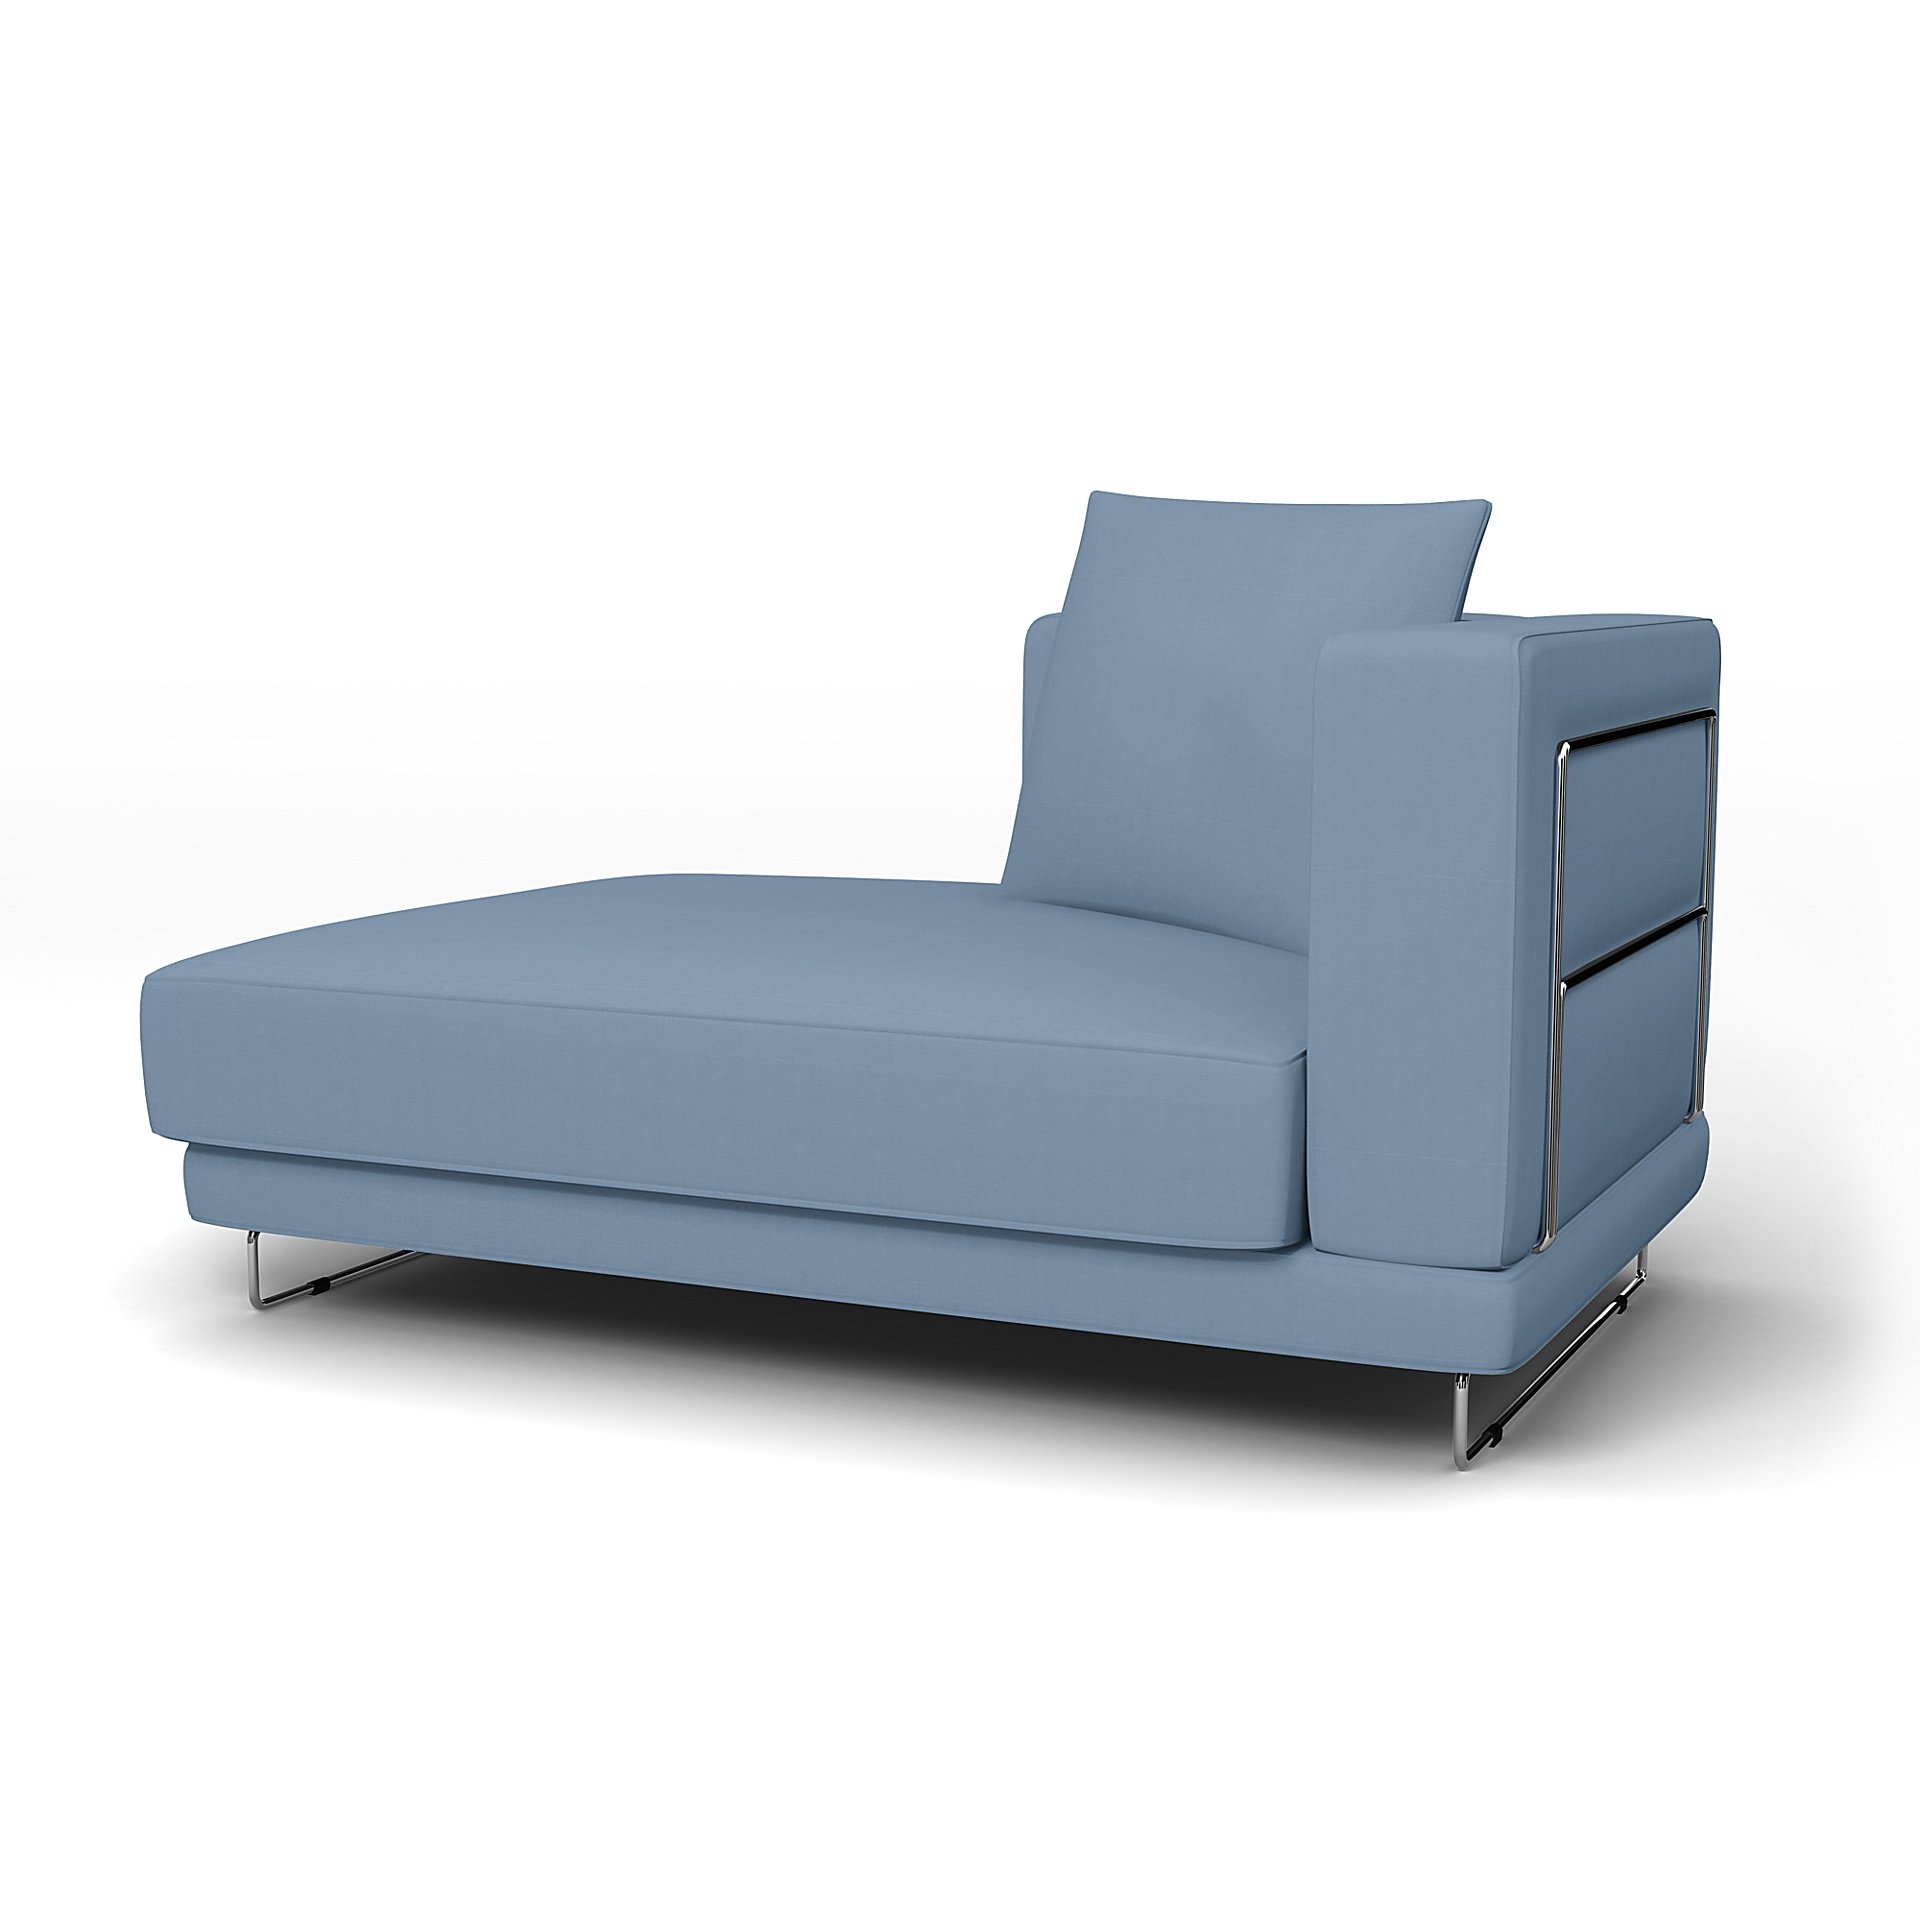 IKEA - Tylosand Chaise with Left Armrest Cover, Dusty Blue, Cotton - Bemz